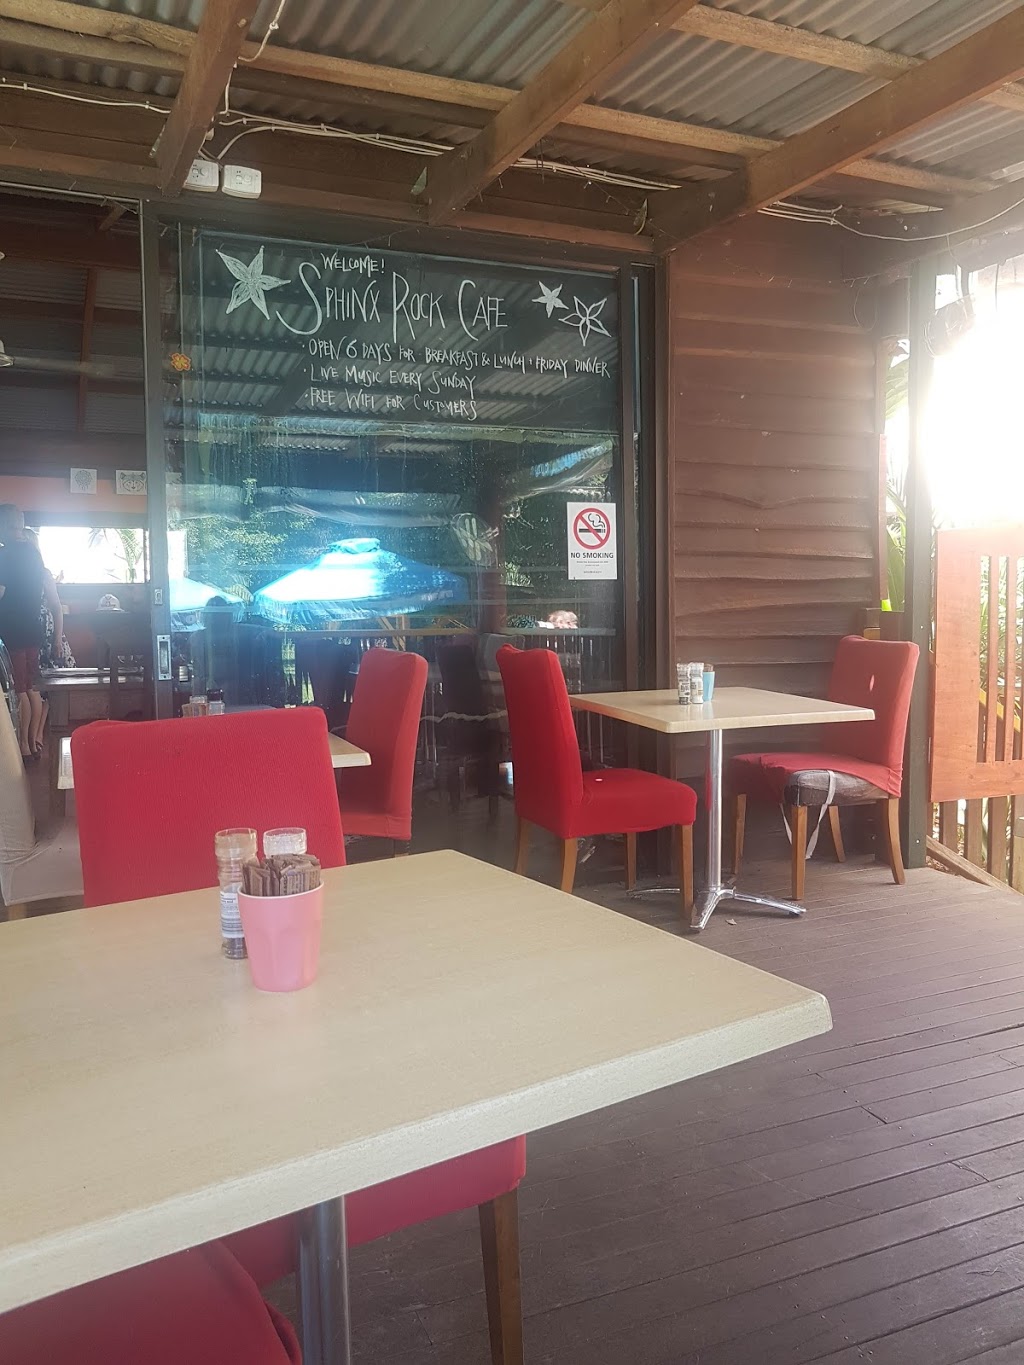 Sphinx Rock Cafe | cafe | 3220 Kyogle Rd, Mount Burrell NSW 2484, Australia | 0266797118 OR +61 2 6679 7118